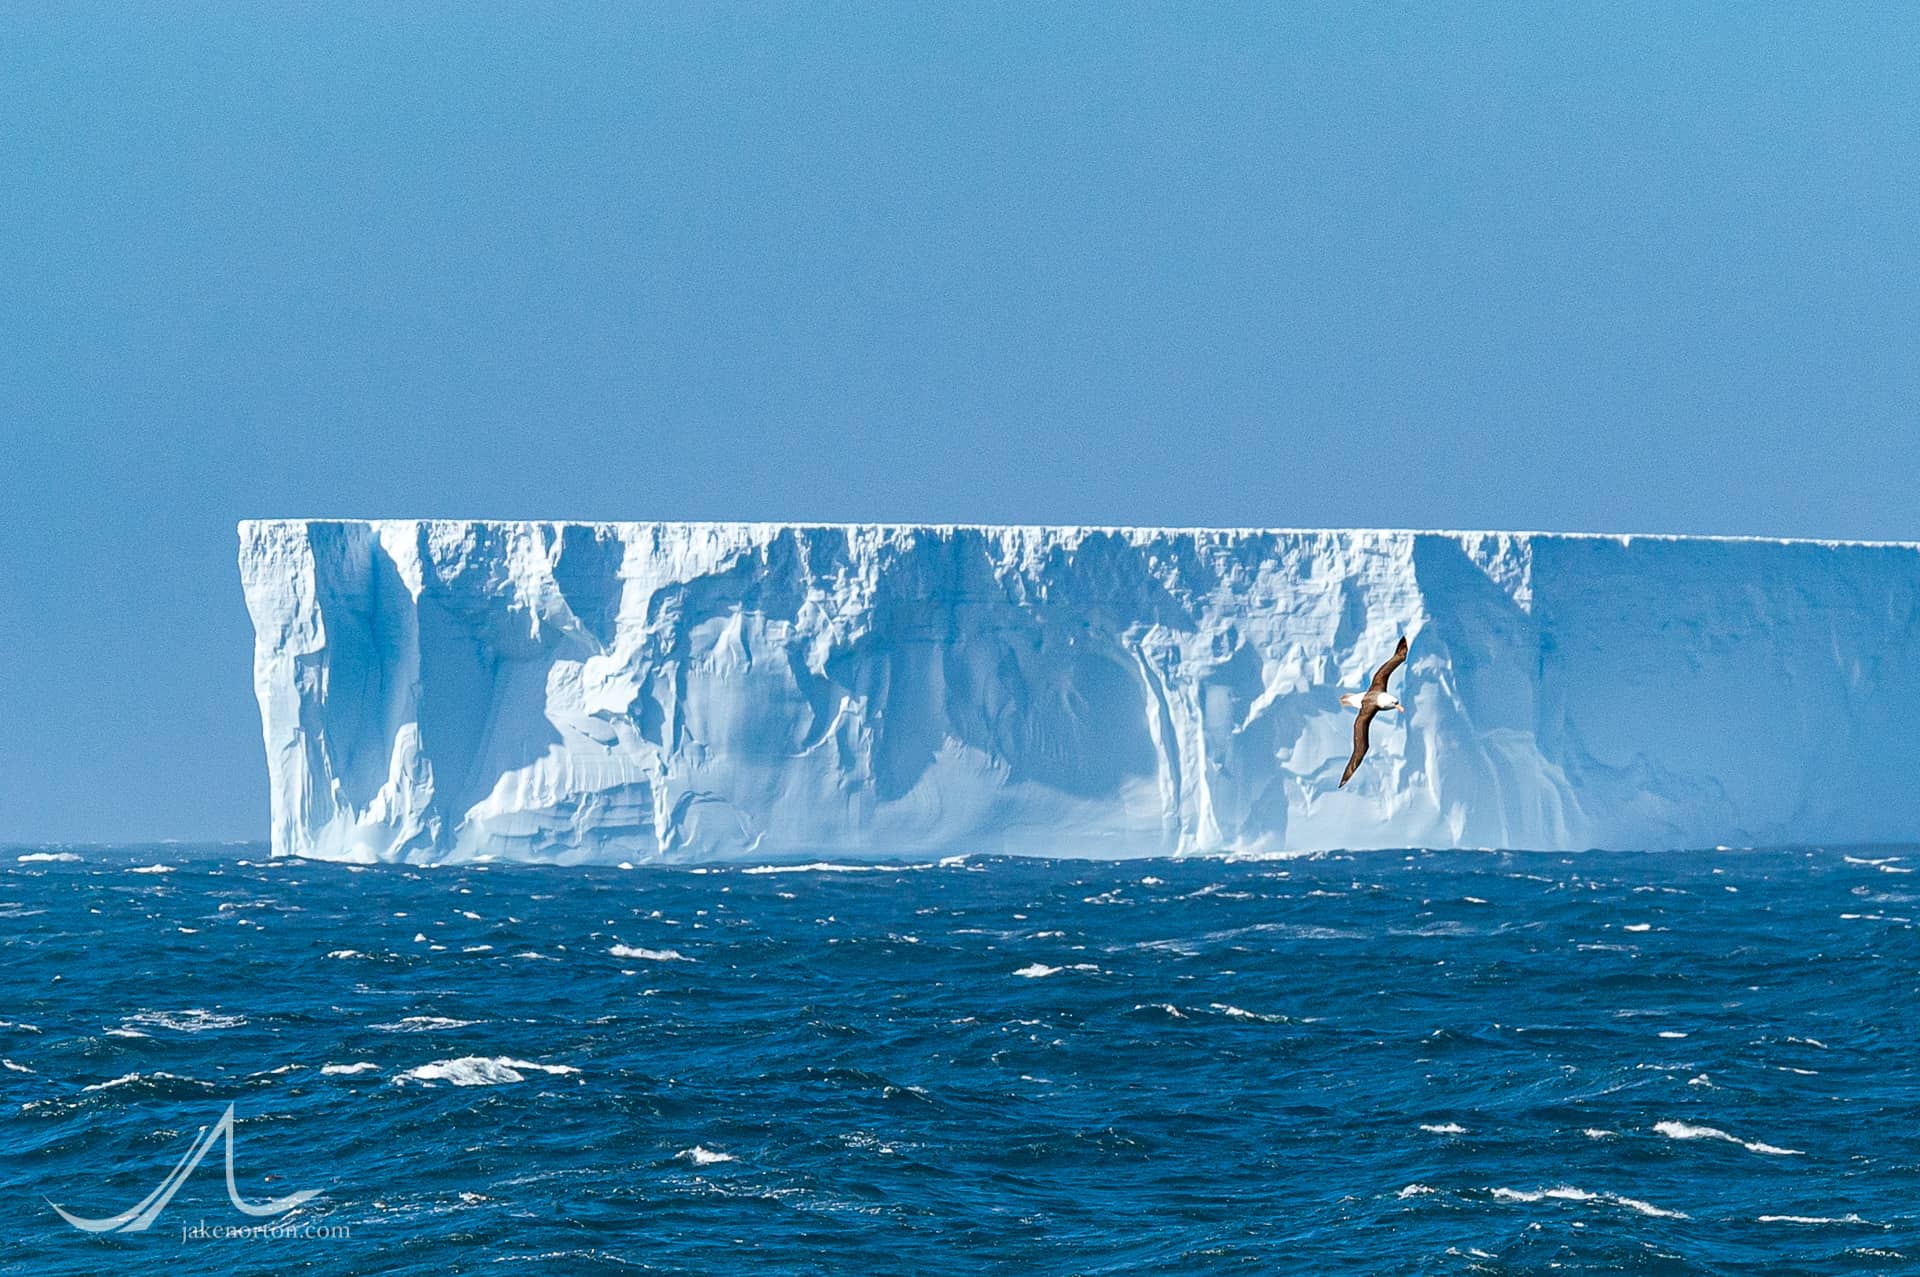 A Black-browed albatross flies in front of a massive iceberg broken off from the Larsen Ice Shelf in Antarctica floats in open waters of the South Atlantic Ocean near South Georgia.